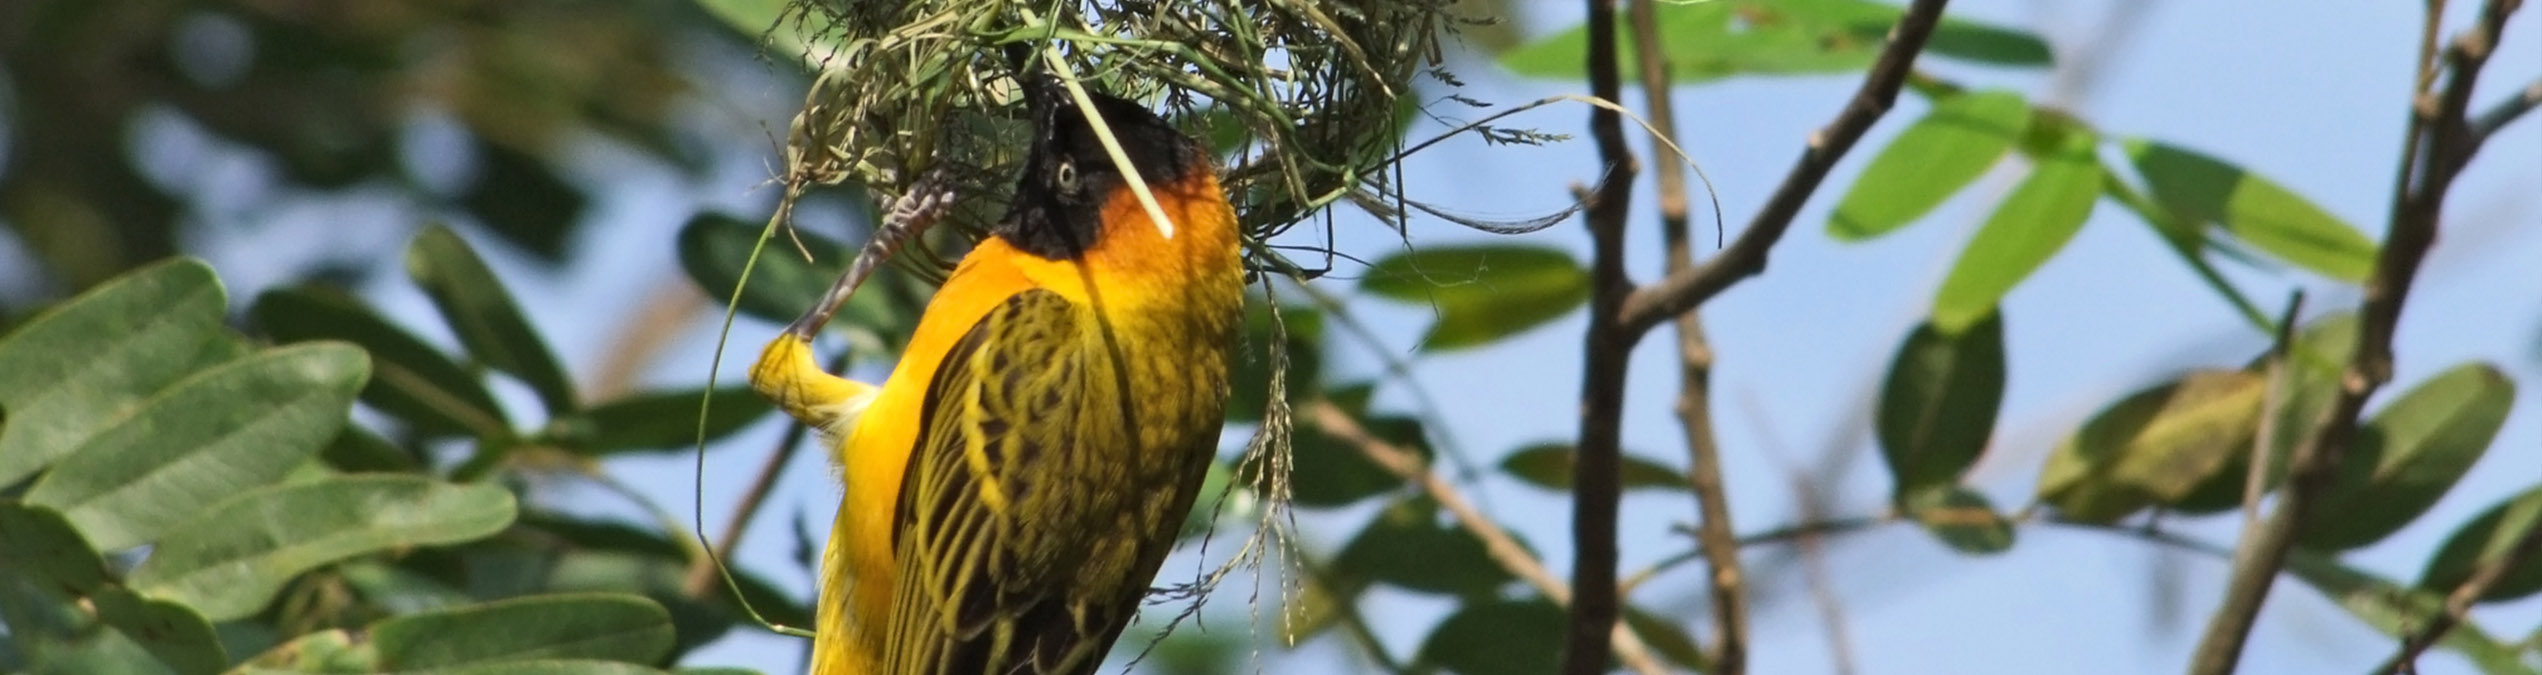 Safari Club - Uganda Semuliki National Park weaver bird